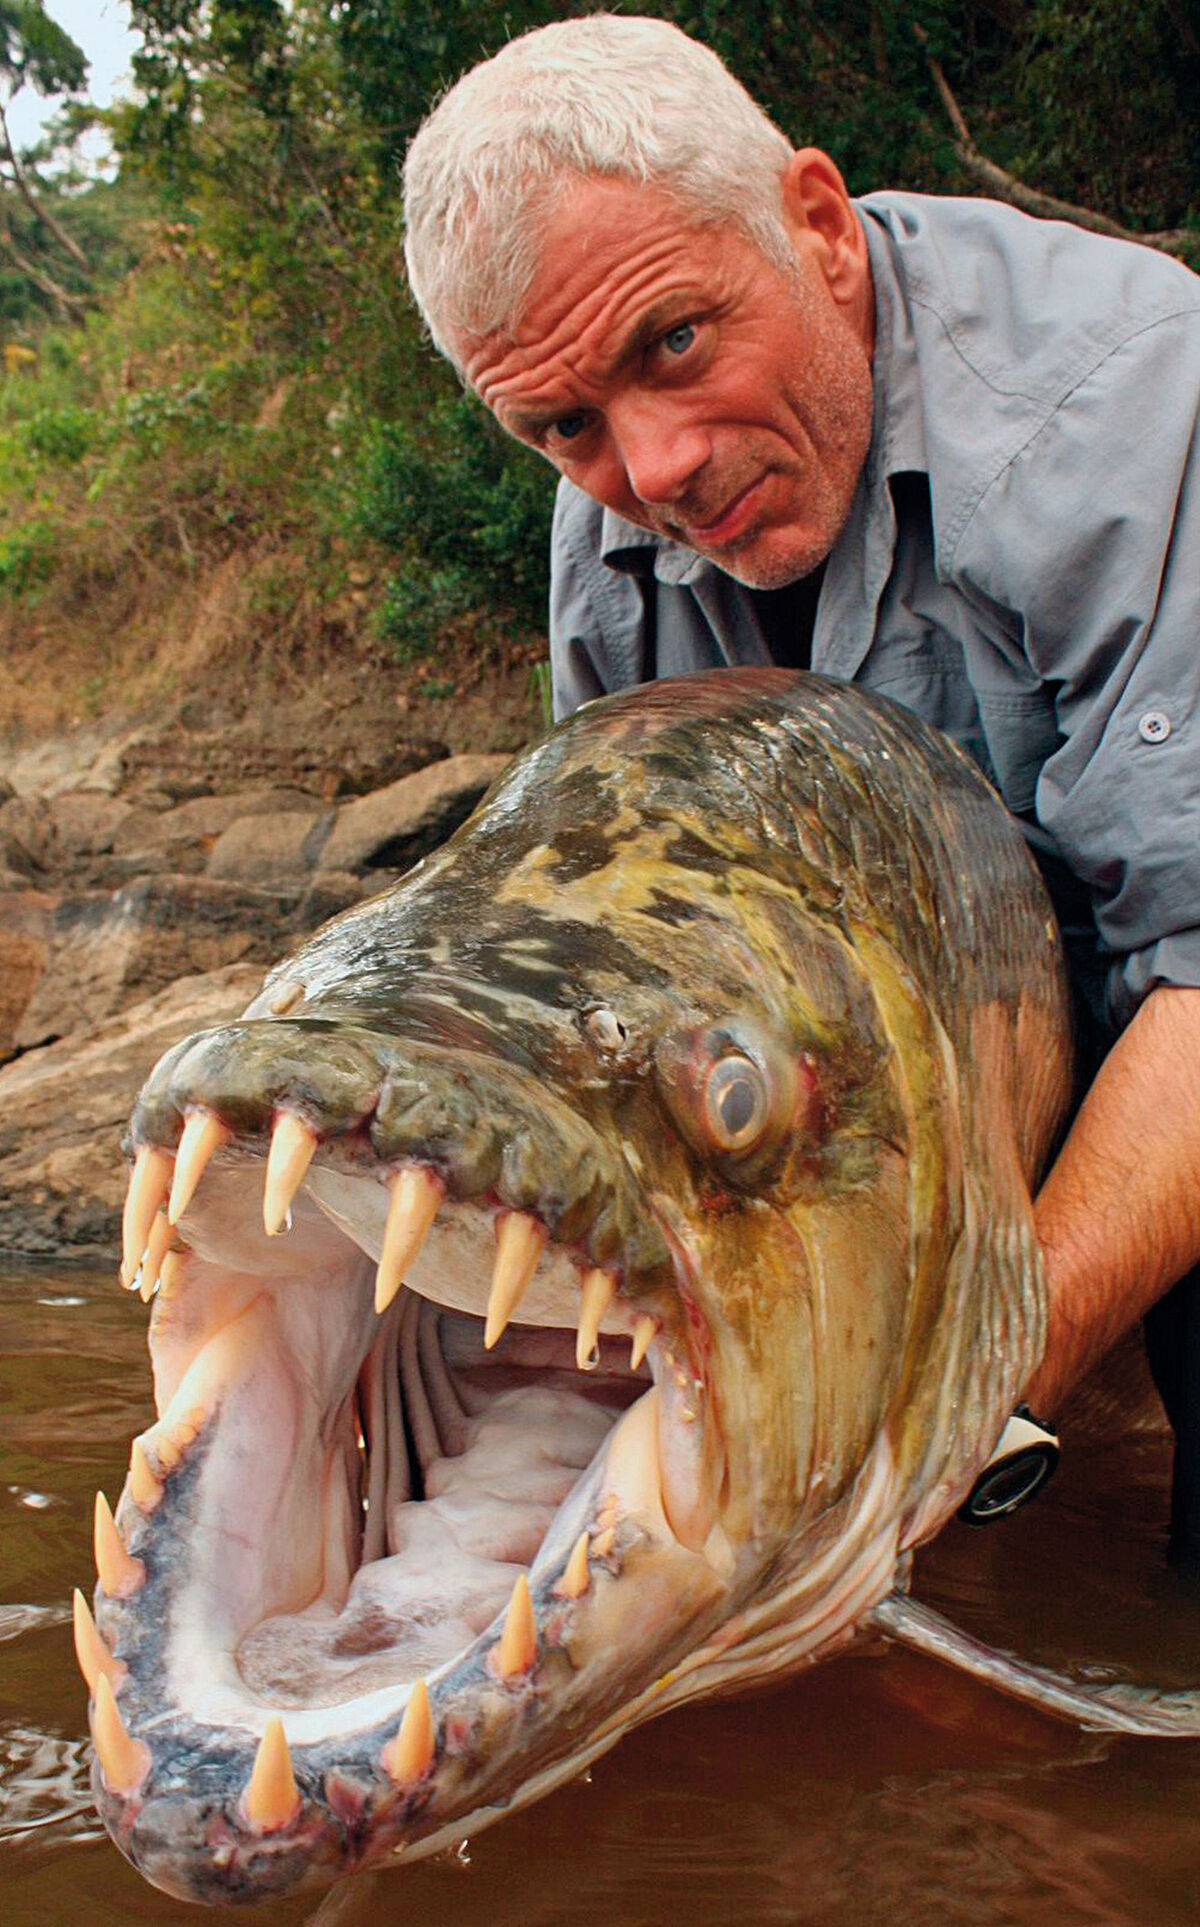 solomon fish river monsters